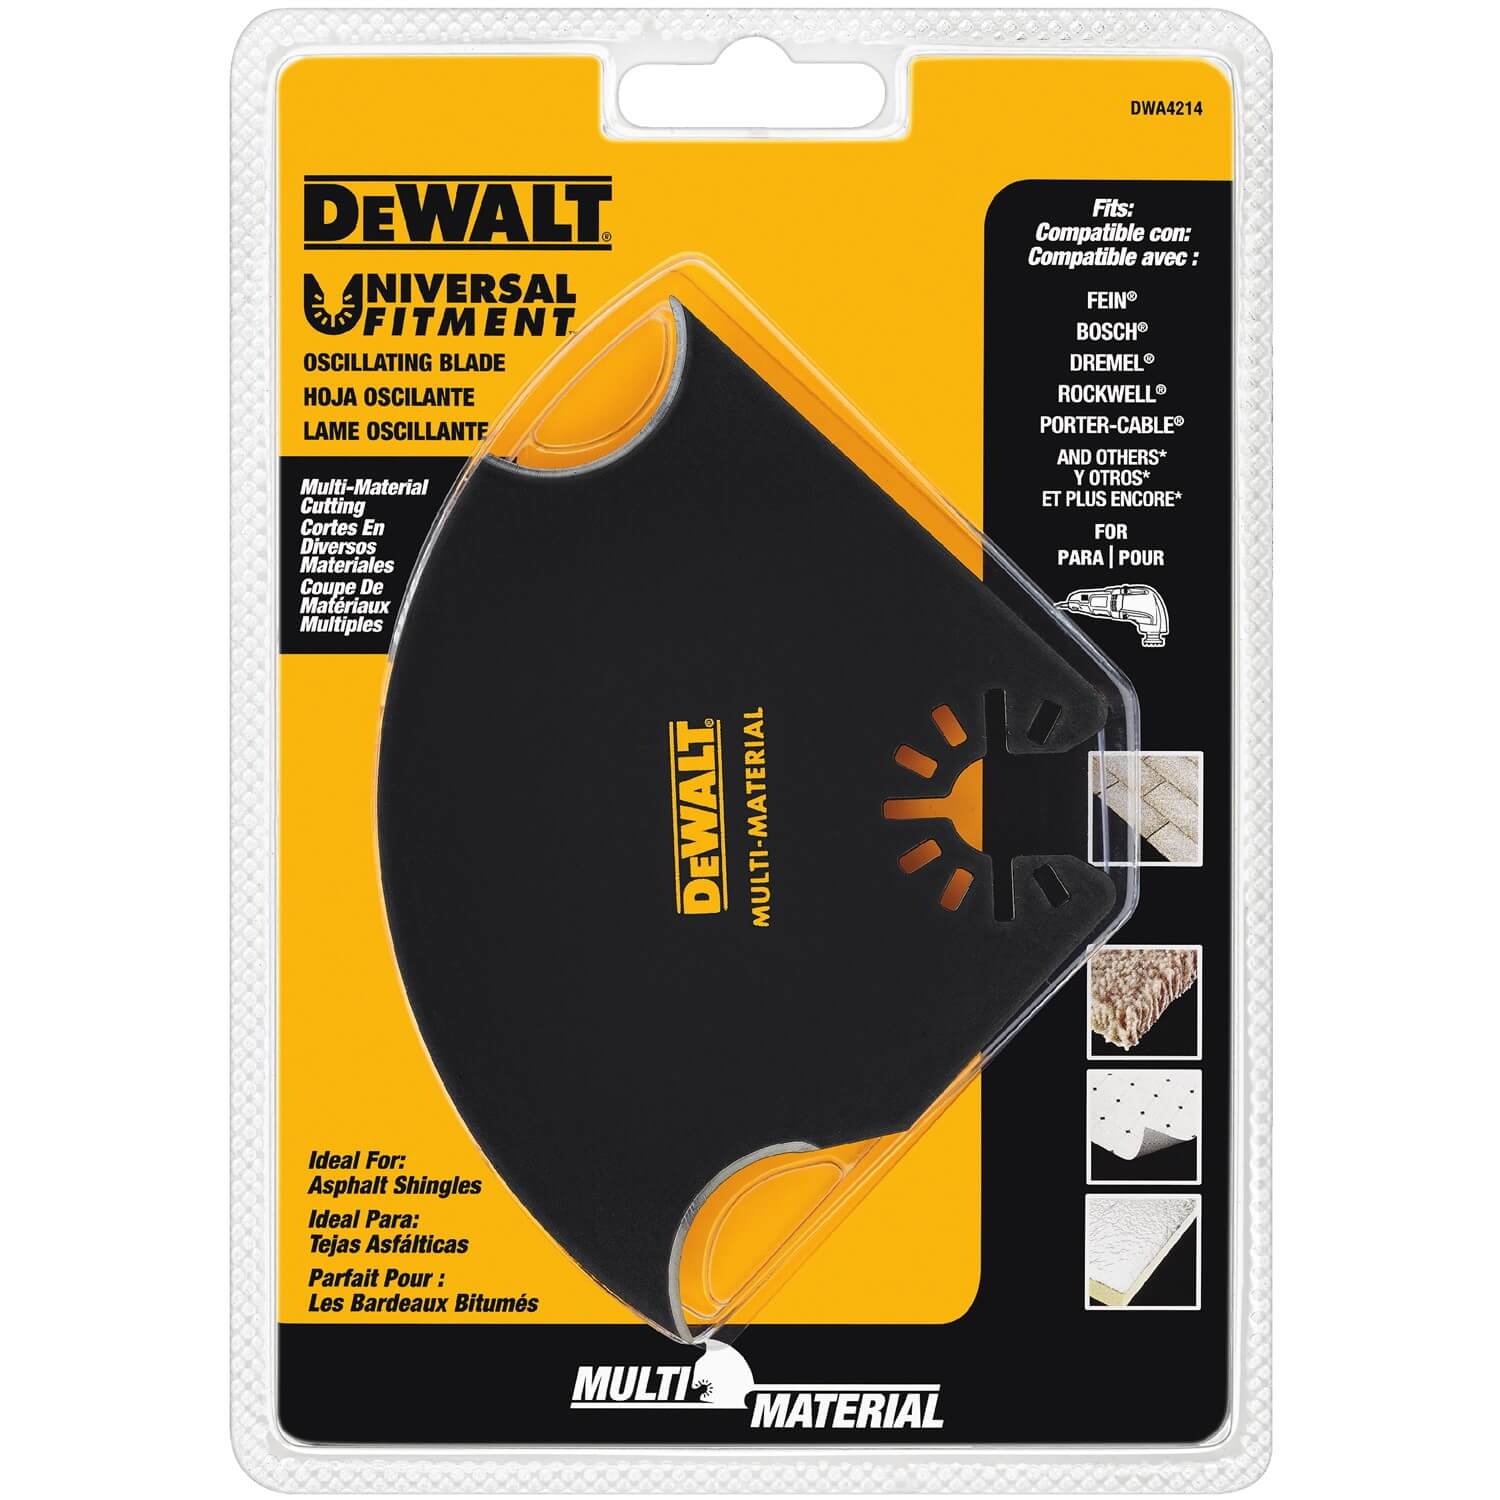 DEWALT DWA4214 - Oscillating Multi-Material Blade - wise-line-tools